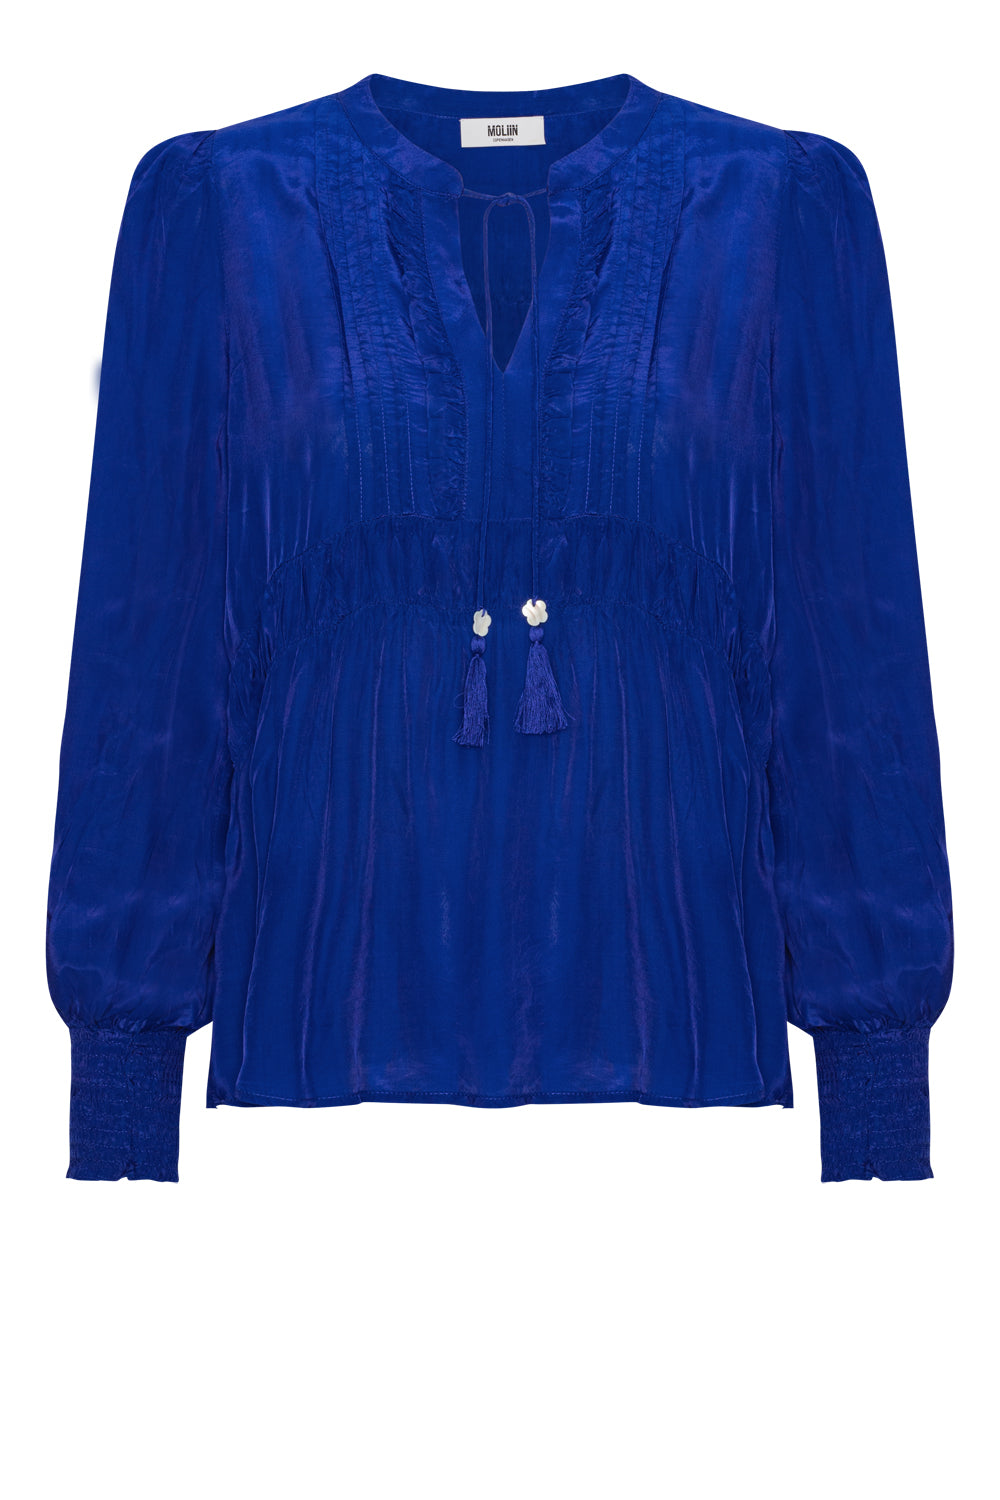 Moliin Shirt Windsor Clematis Blue or Pink €135